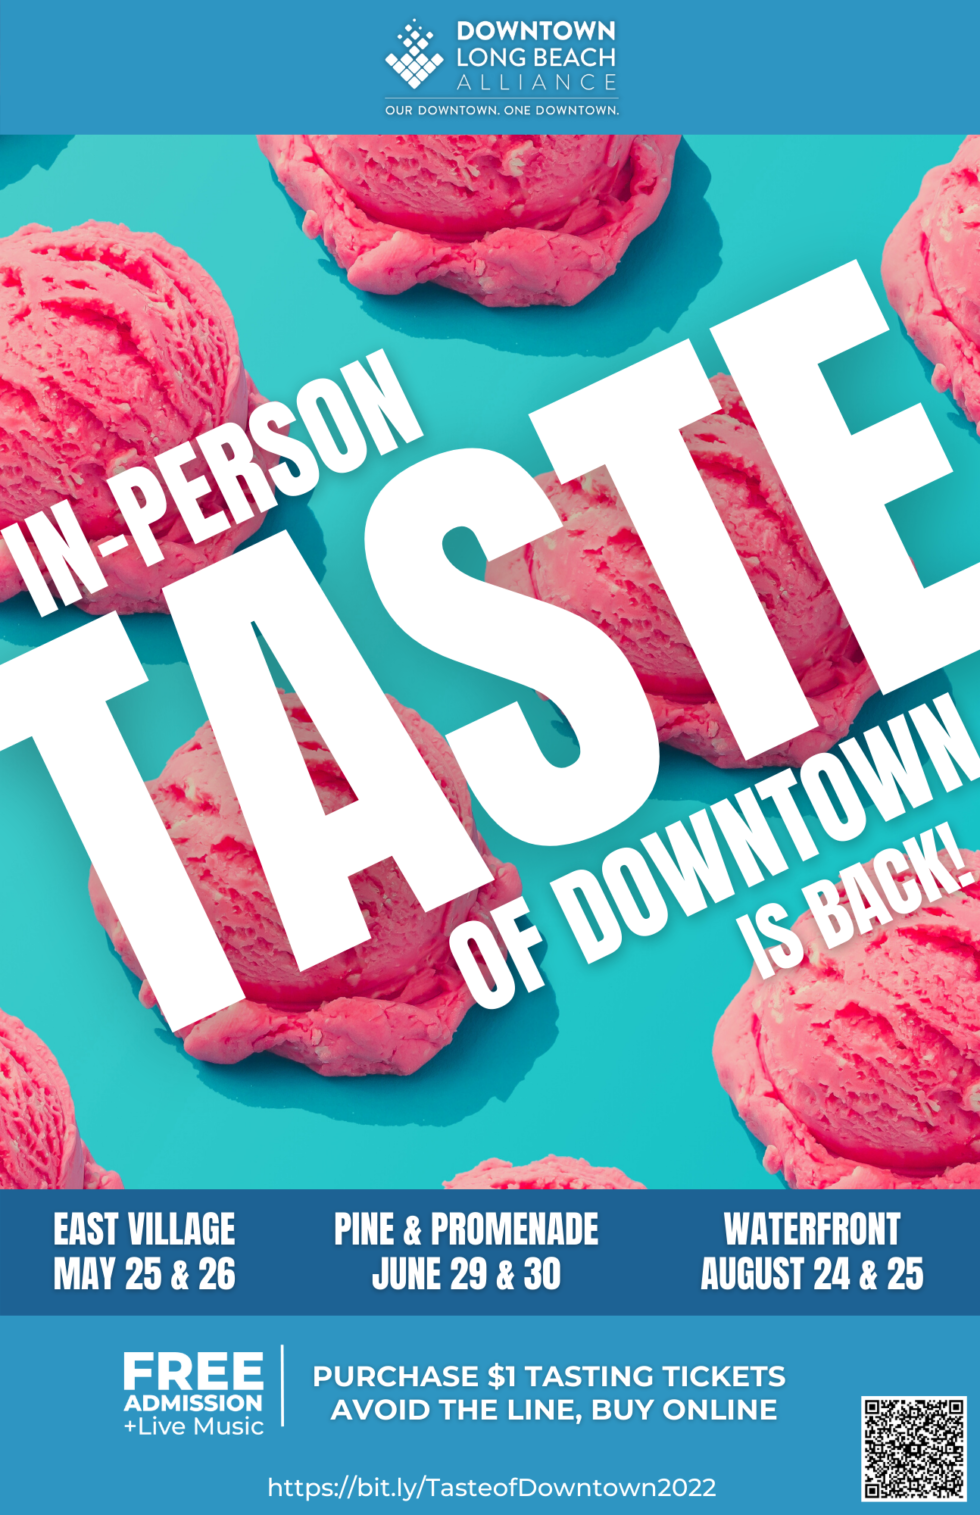 Taste of Downtown 2022 Downtown Long Beach Alliance